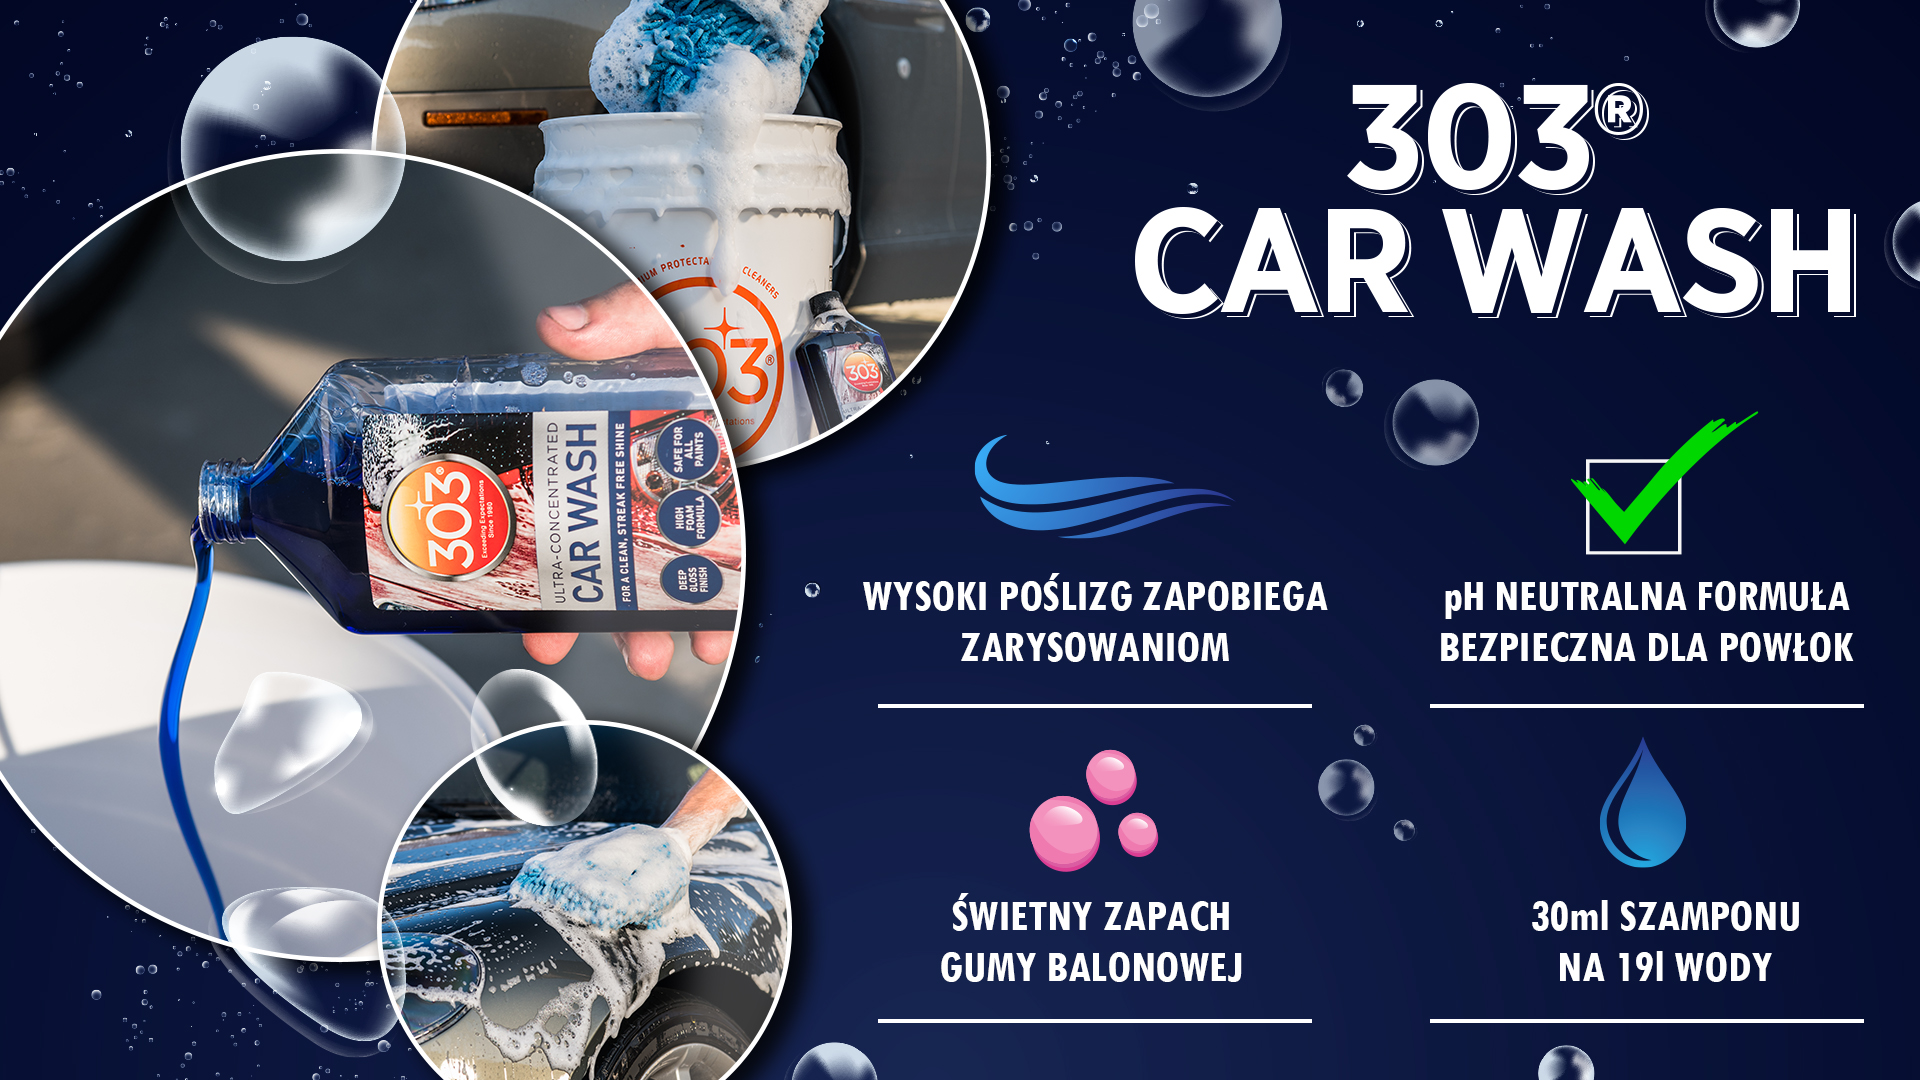 303 Car Wash Infographic 1920x1080 pl.jpg